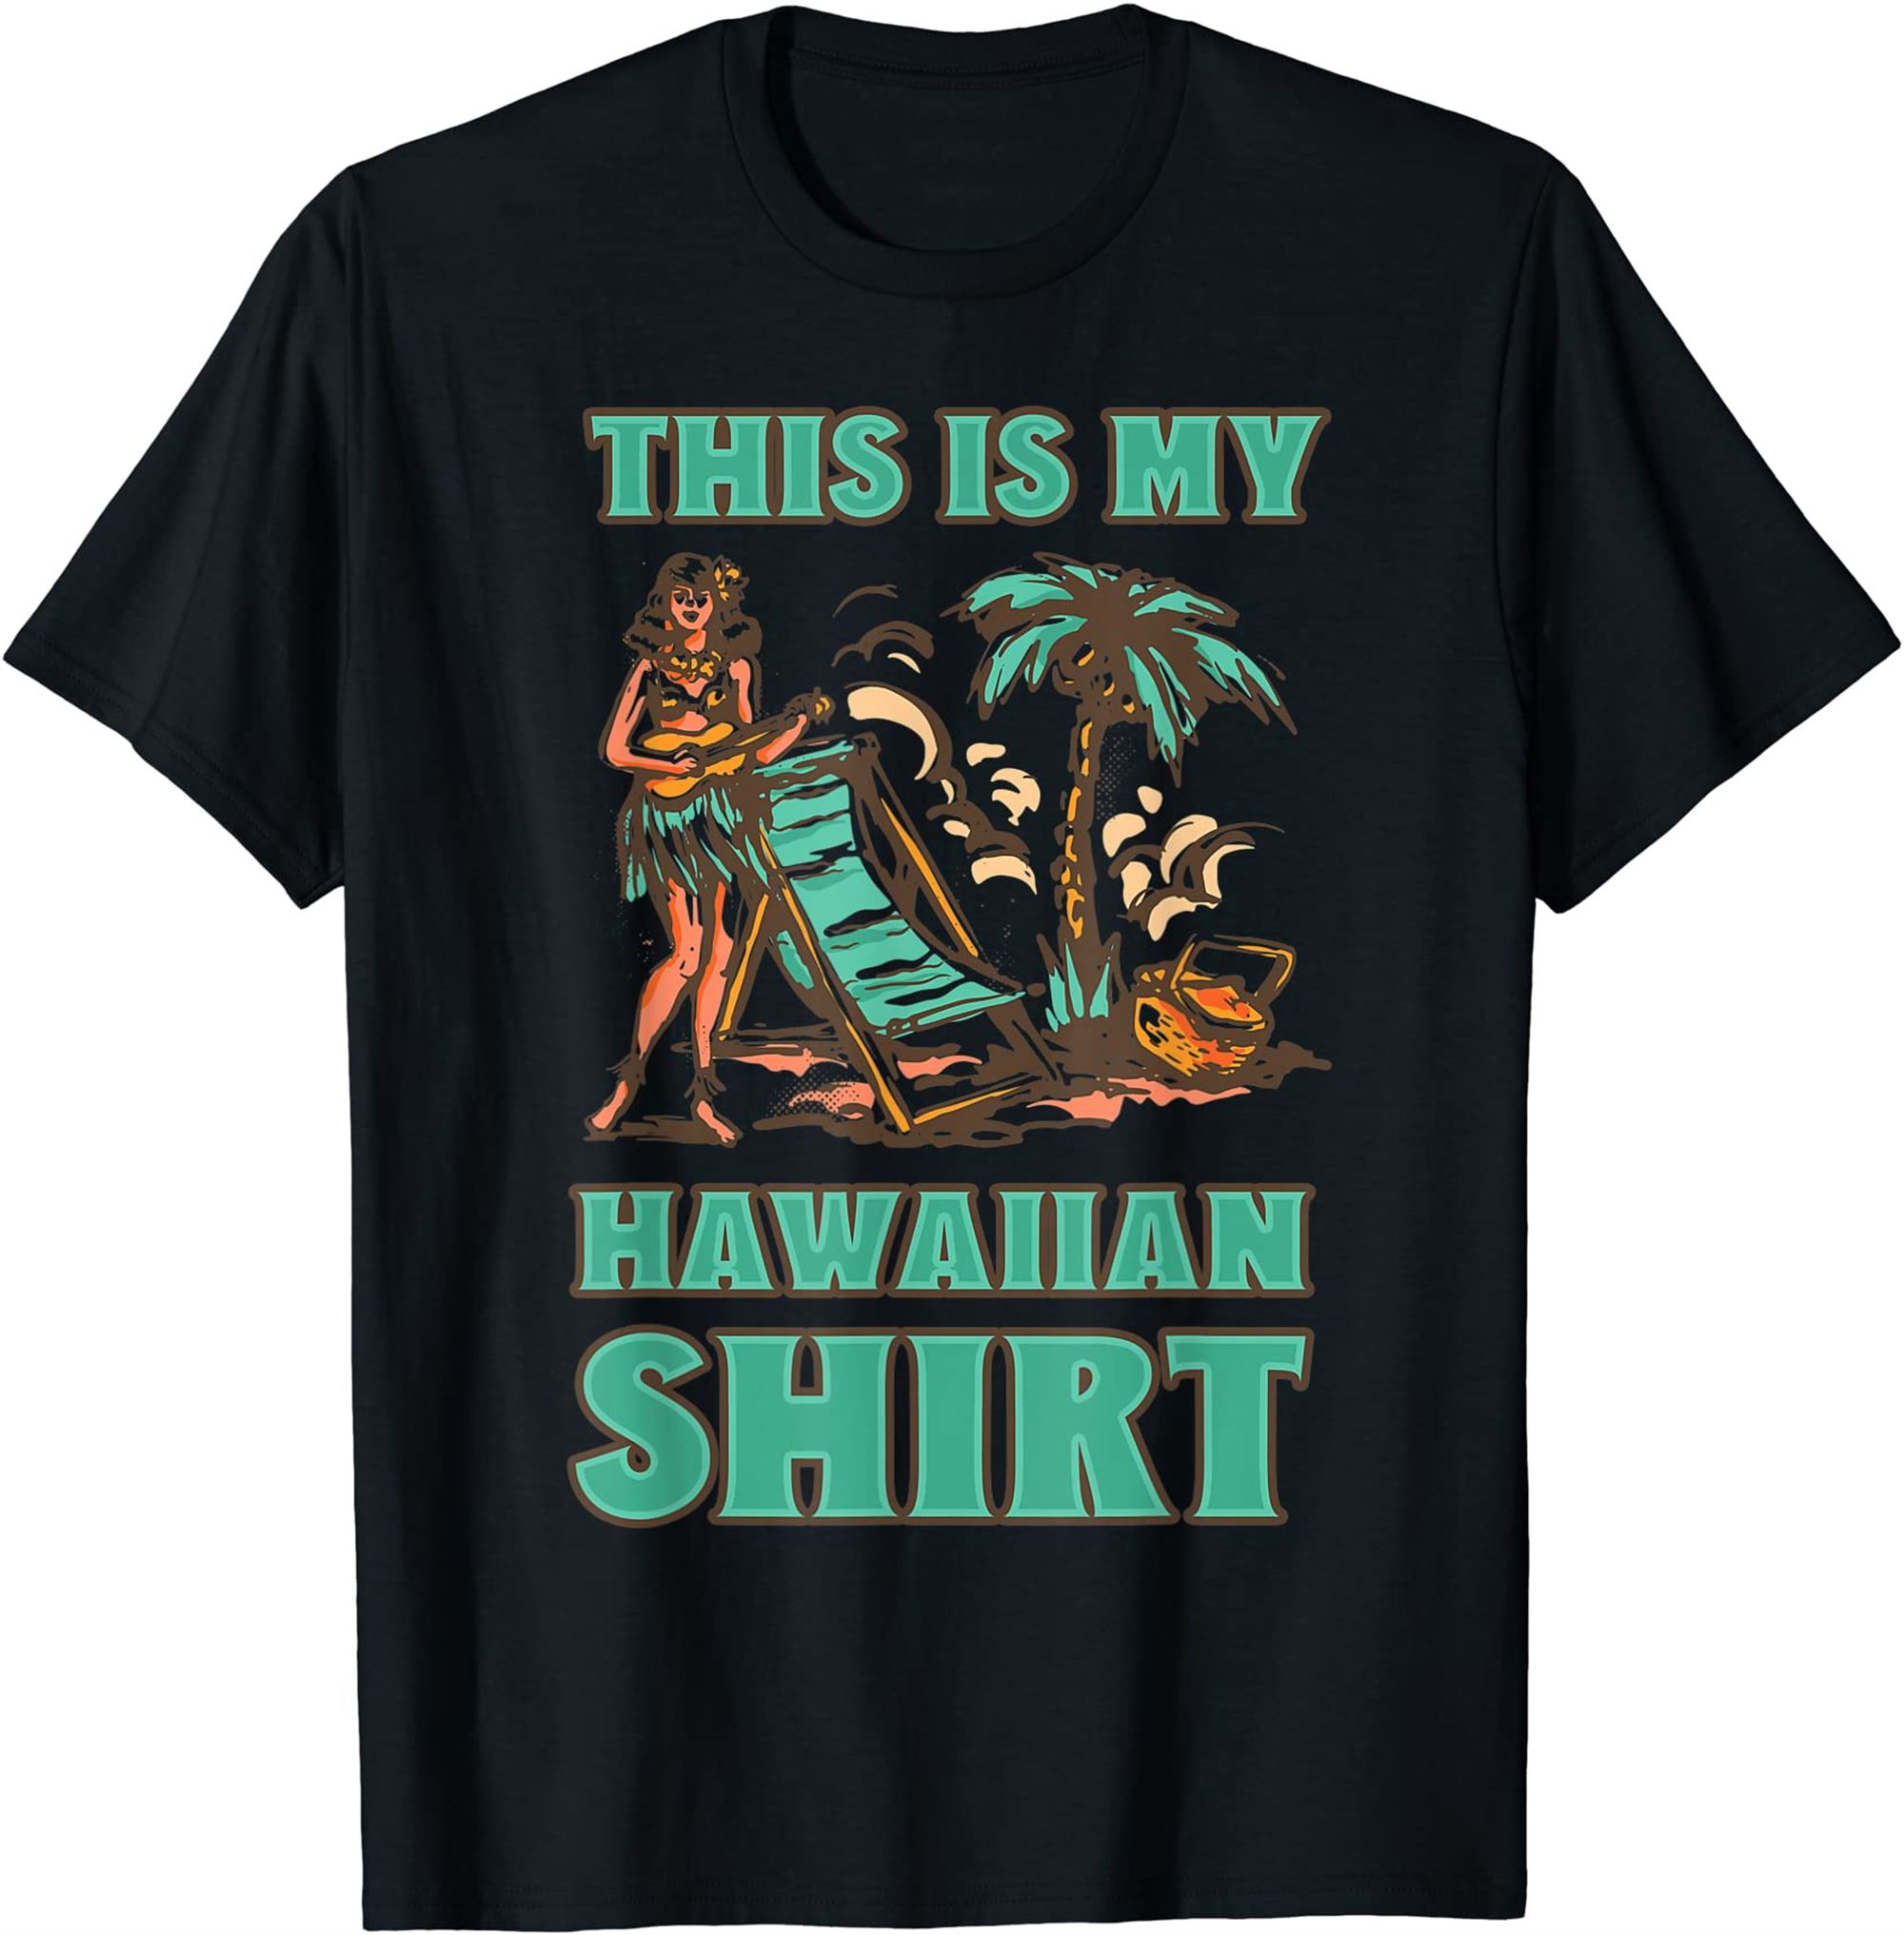 This Is My Hawaiian Shirt Retro Vintage Style Funny Hawaiian T-shirt Full Size Up To 5xl